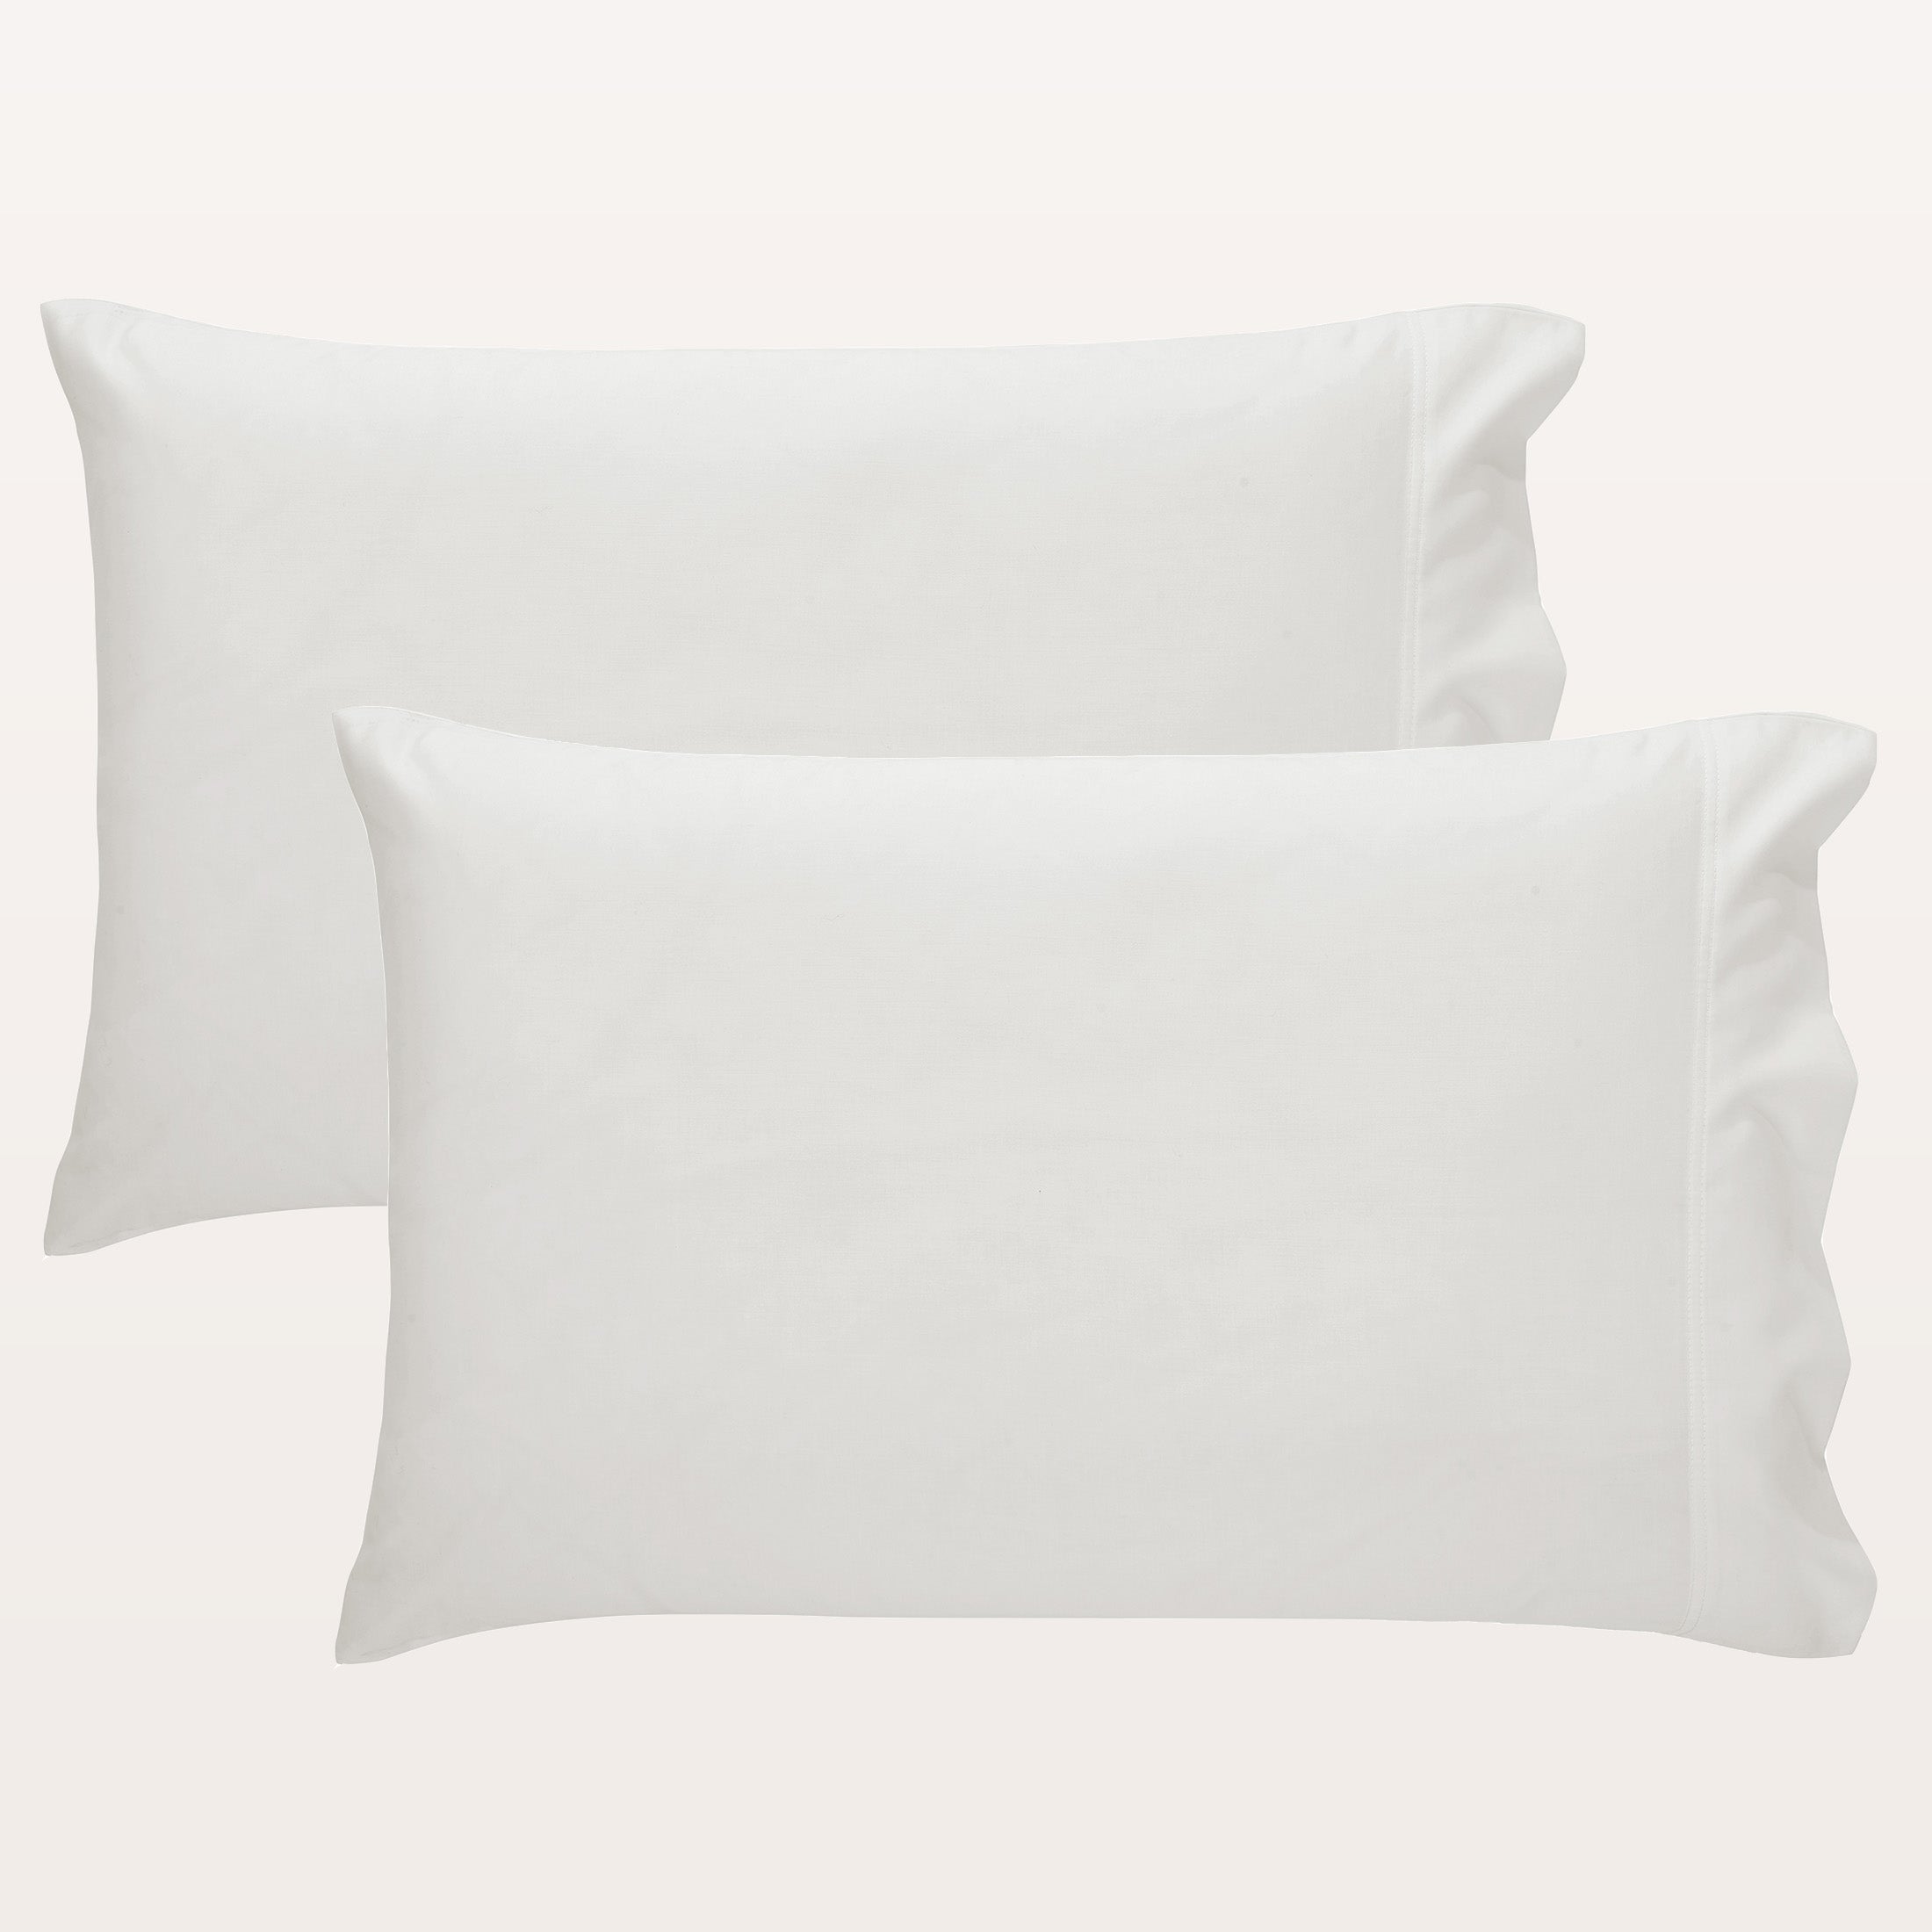 Pillowcase Pair - 100% Egyptian Cotton - Luxury Comfort - California Design Den